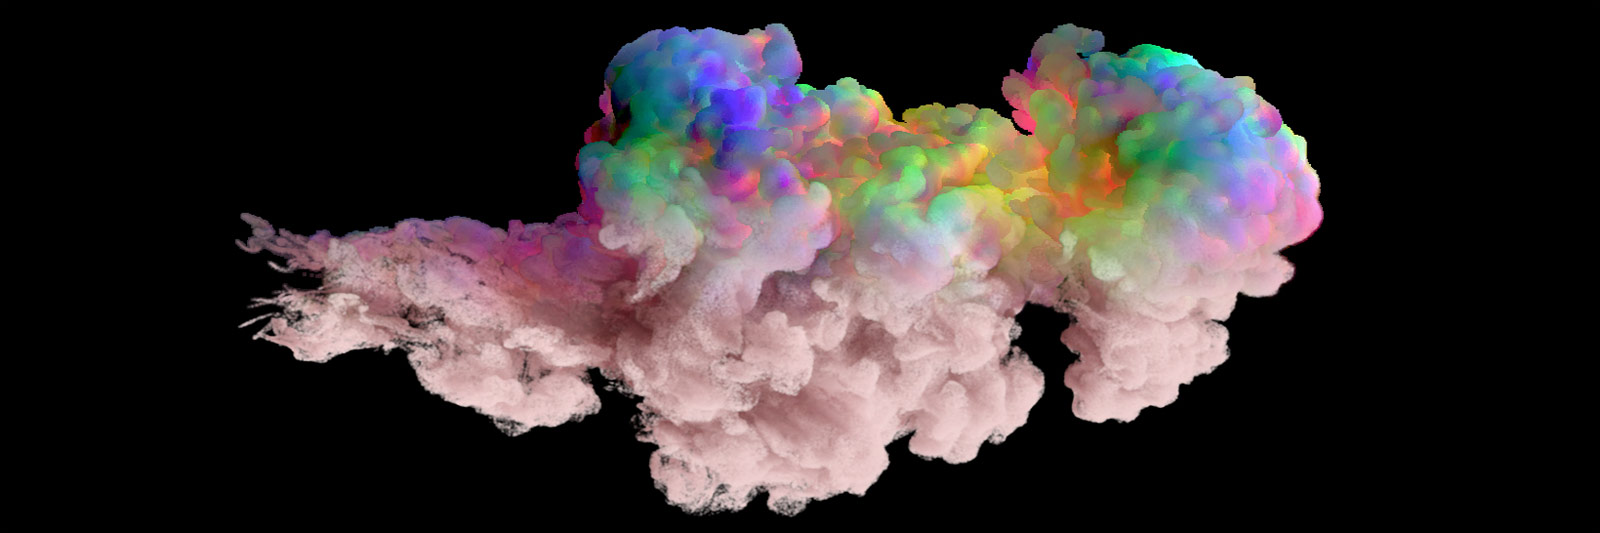 generated image of rainbow colored smoke 